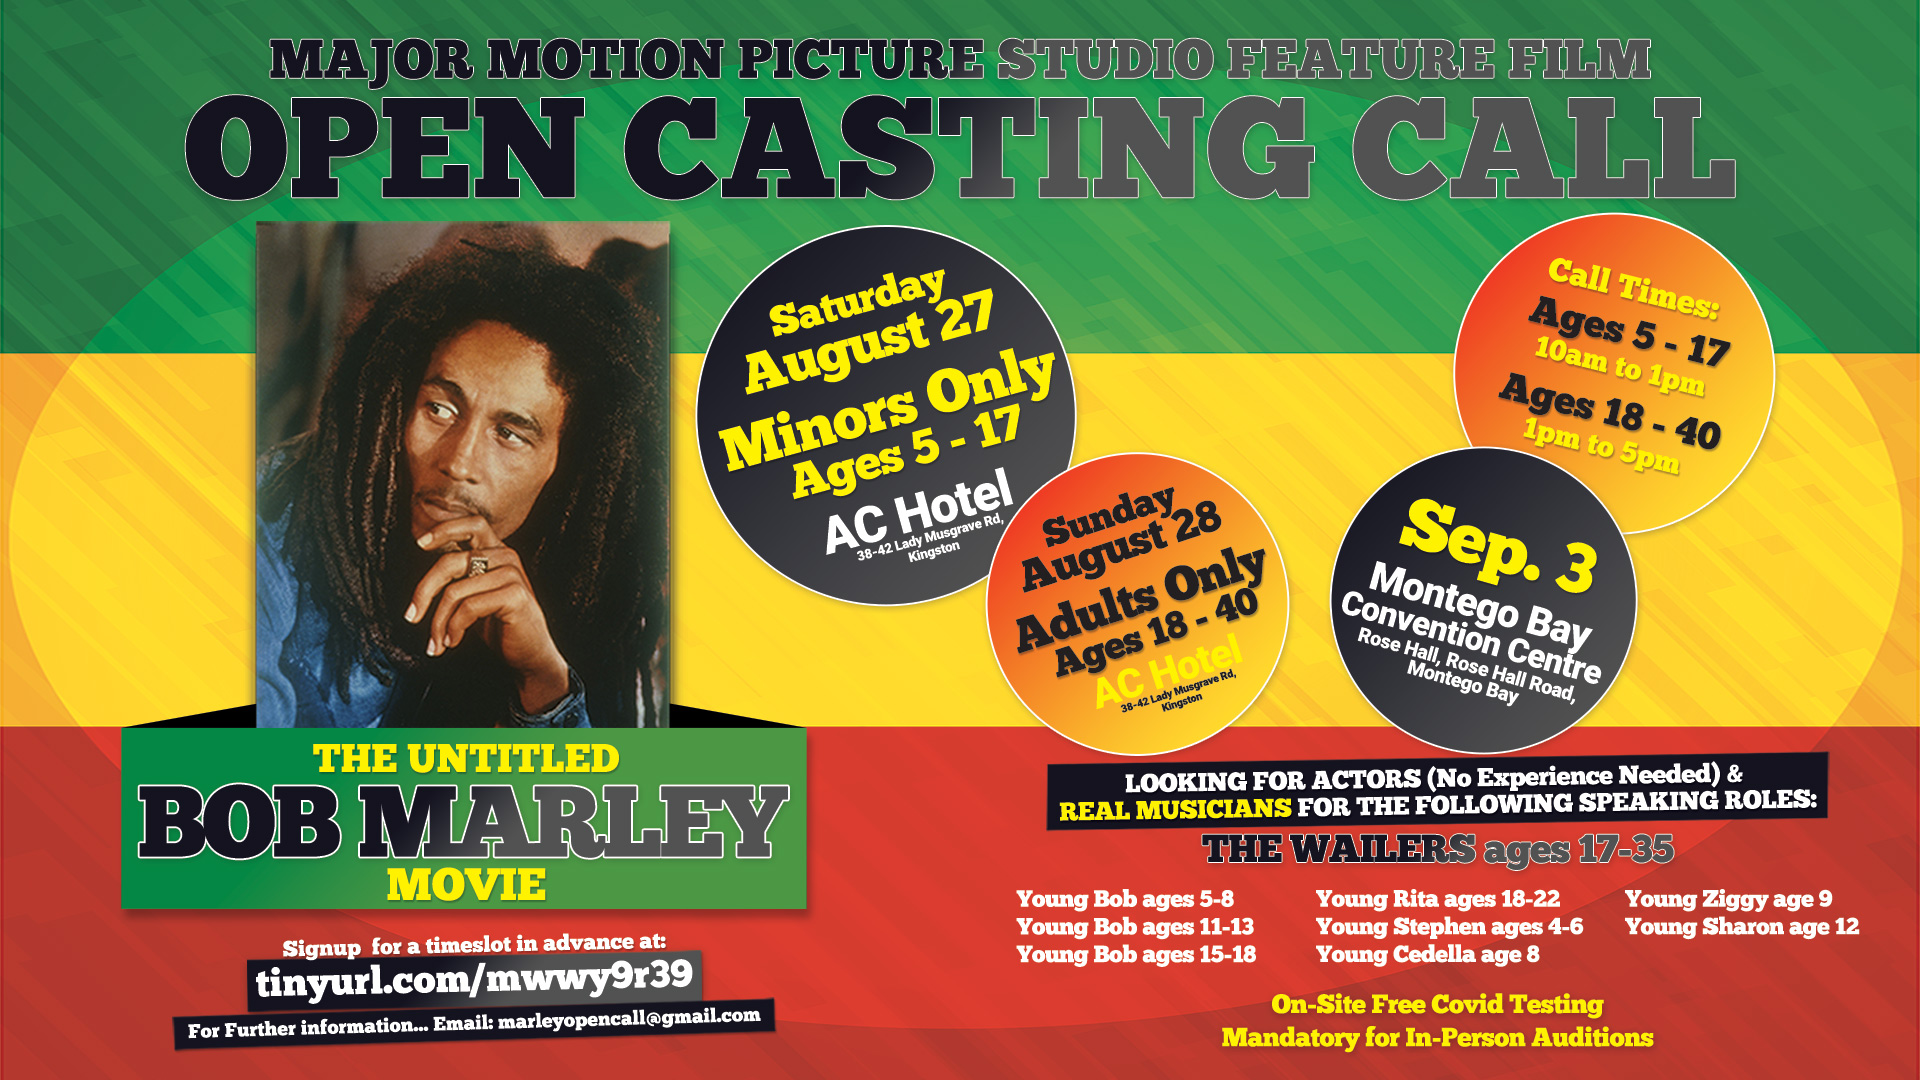 Open Casting Call for Untitled Bob Marley Biopic - Cedella Marley @ Sunrise | CVMTV [8/26/2022]